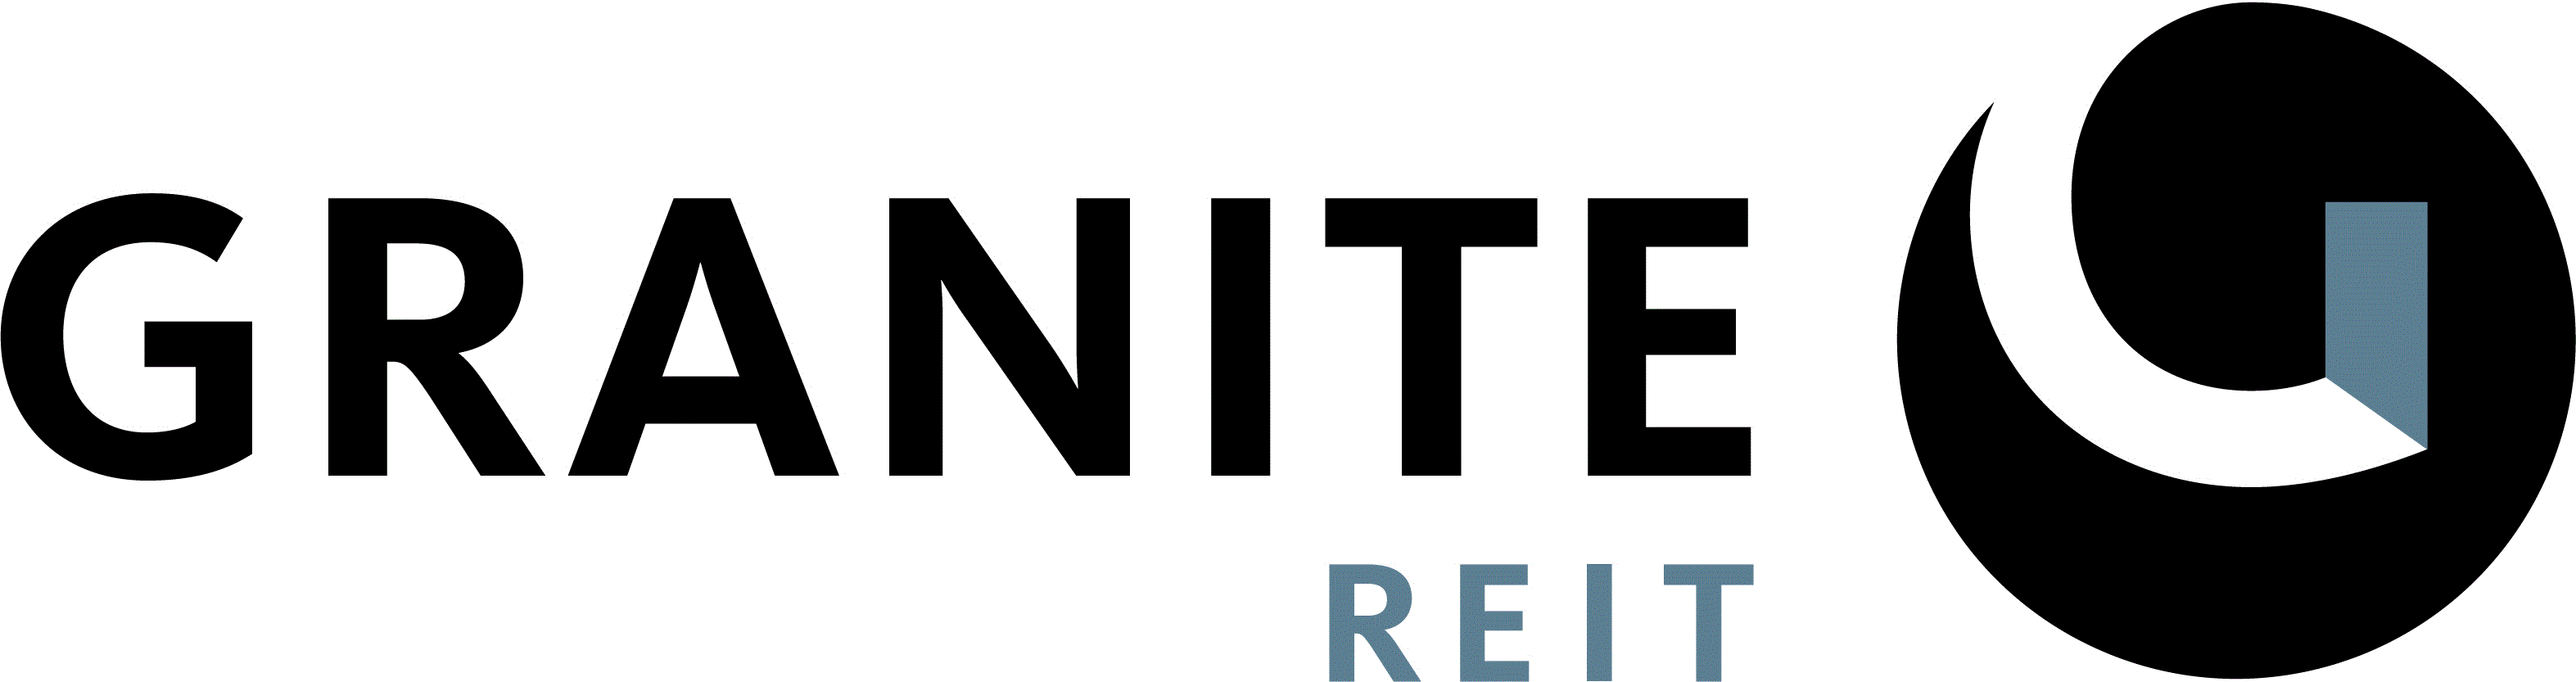 Granite REIT logo RGB.gif